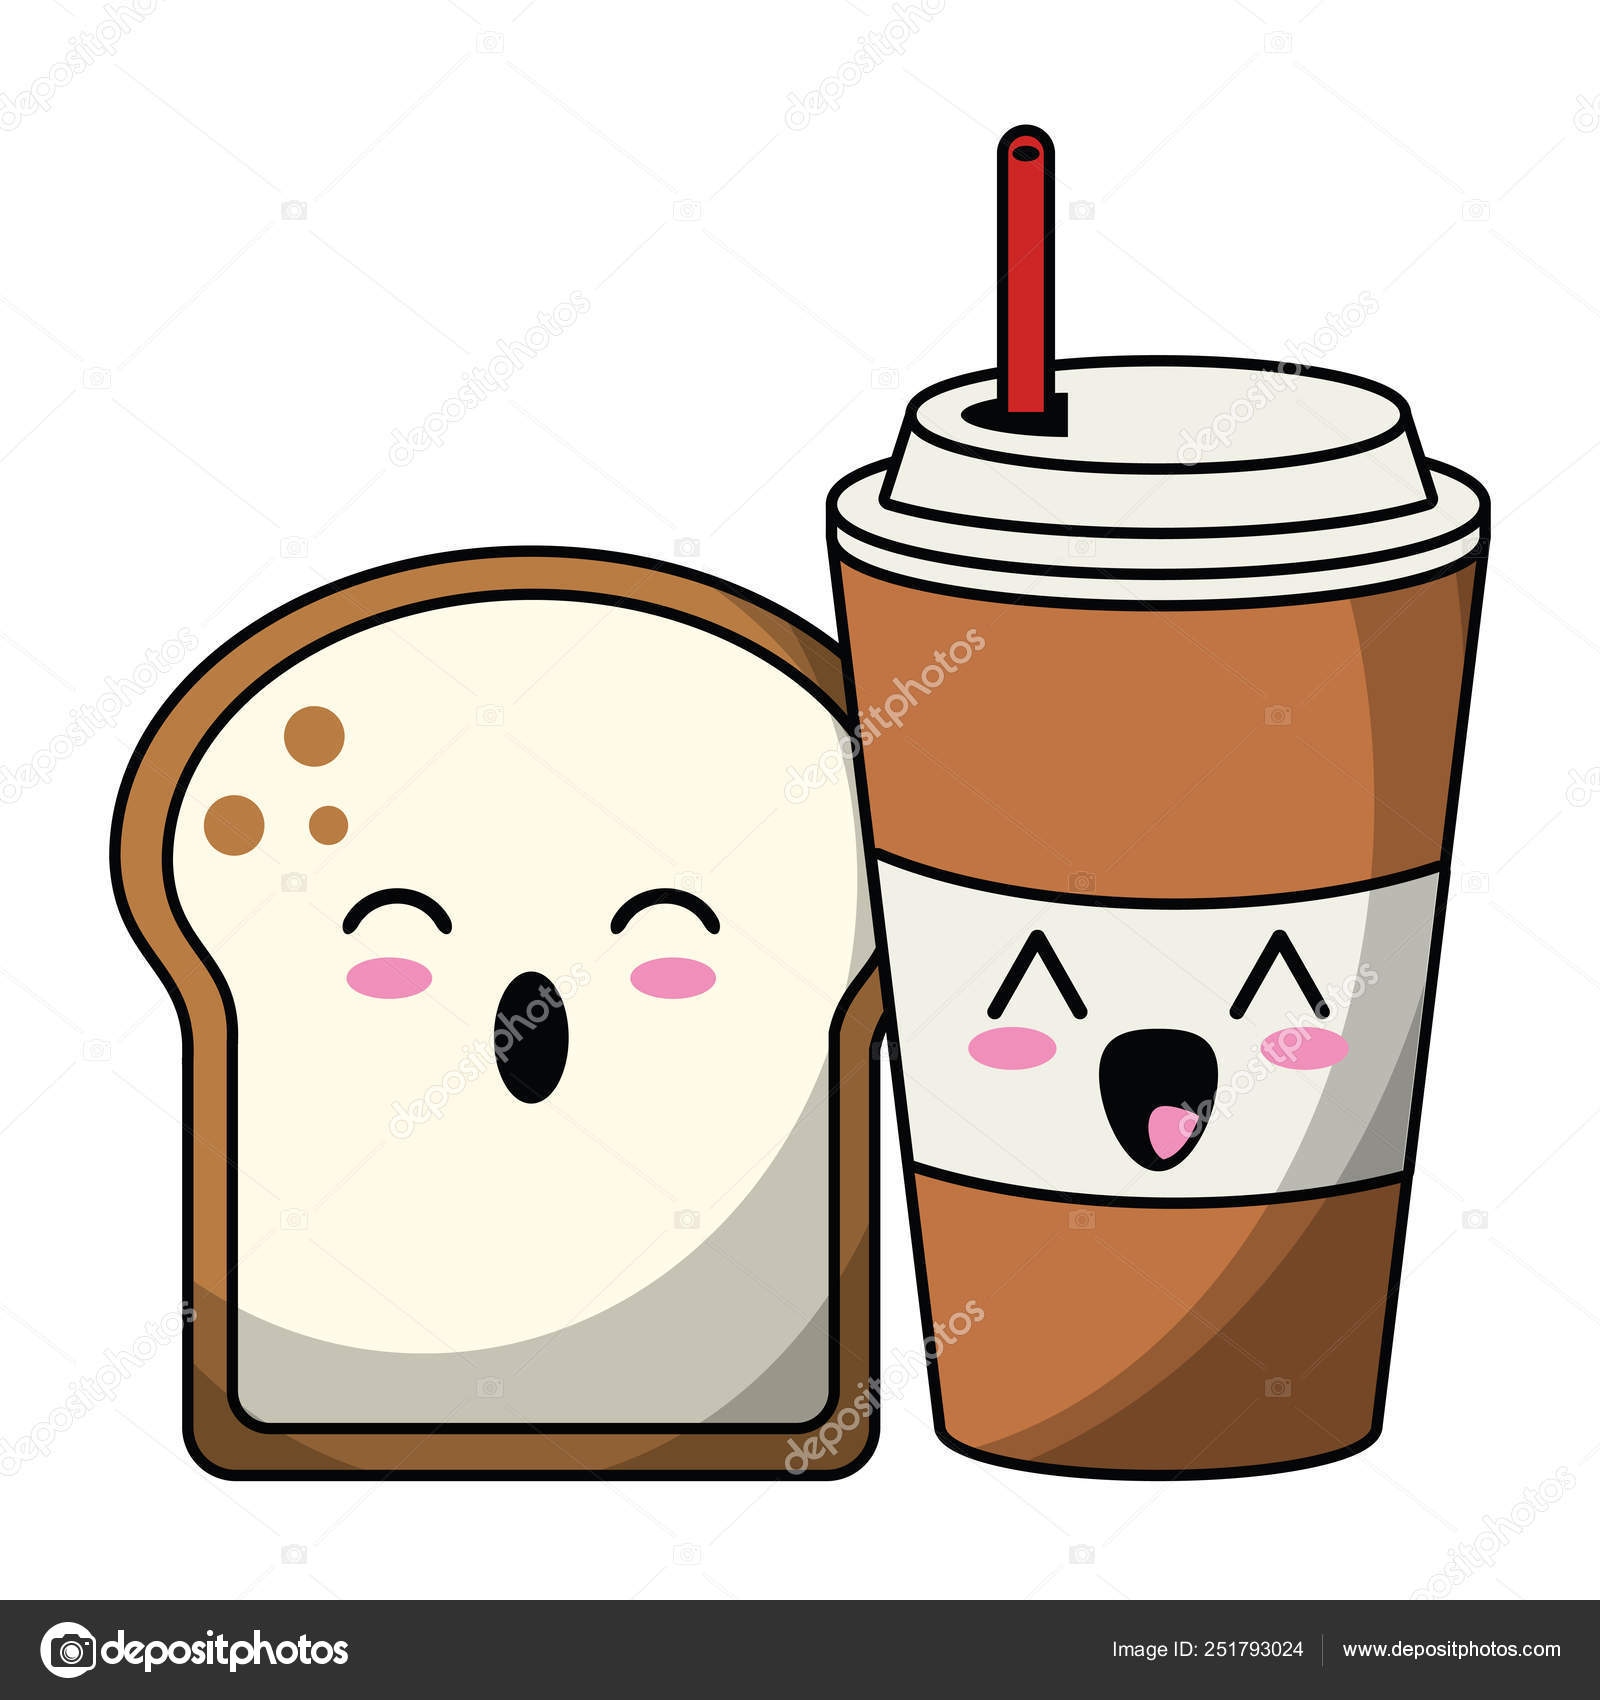 https://st4.depositphotos.com/5934840/25179/v/1600/depositphotos_251793024-stock-illustration-bread-and-coffee-cup-kawaii.jpg